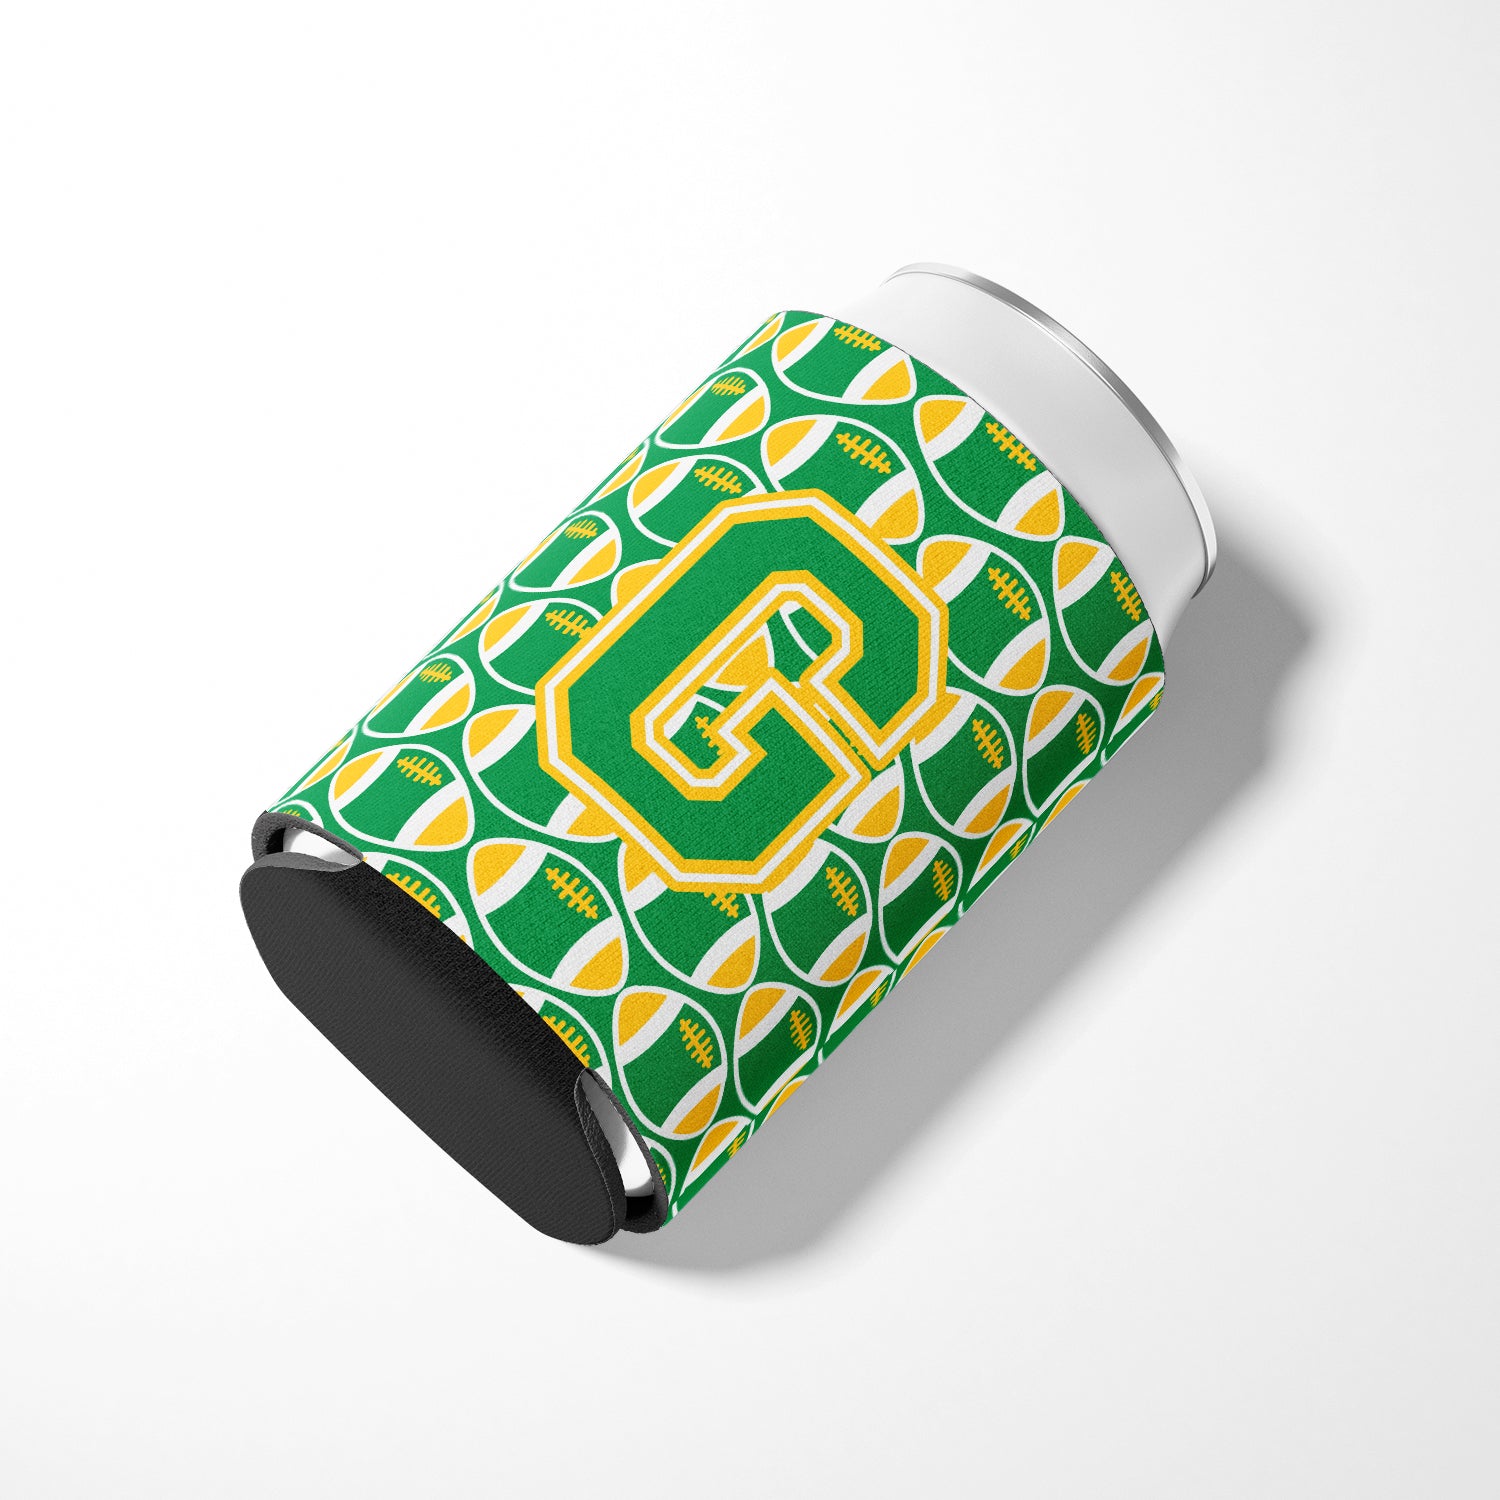 Letter G Football Green and Gold Can or Bottle Hugger CJ1069-GCC.